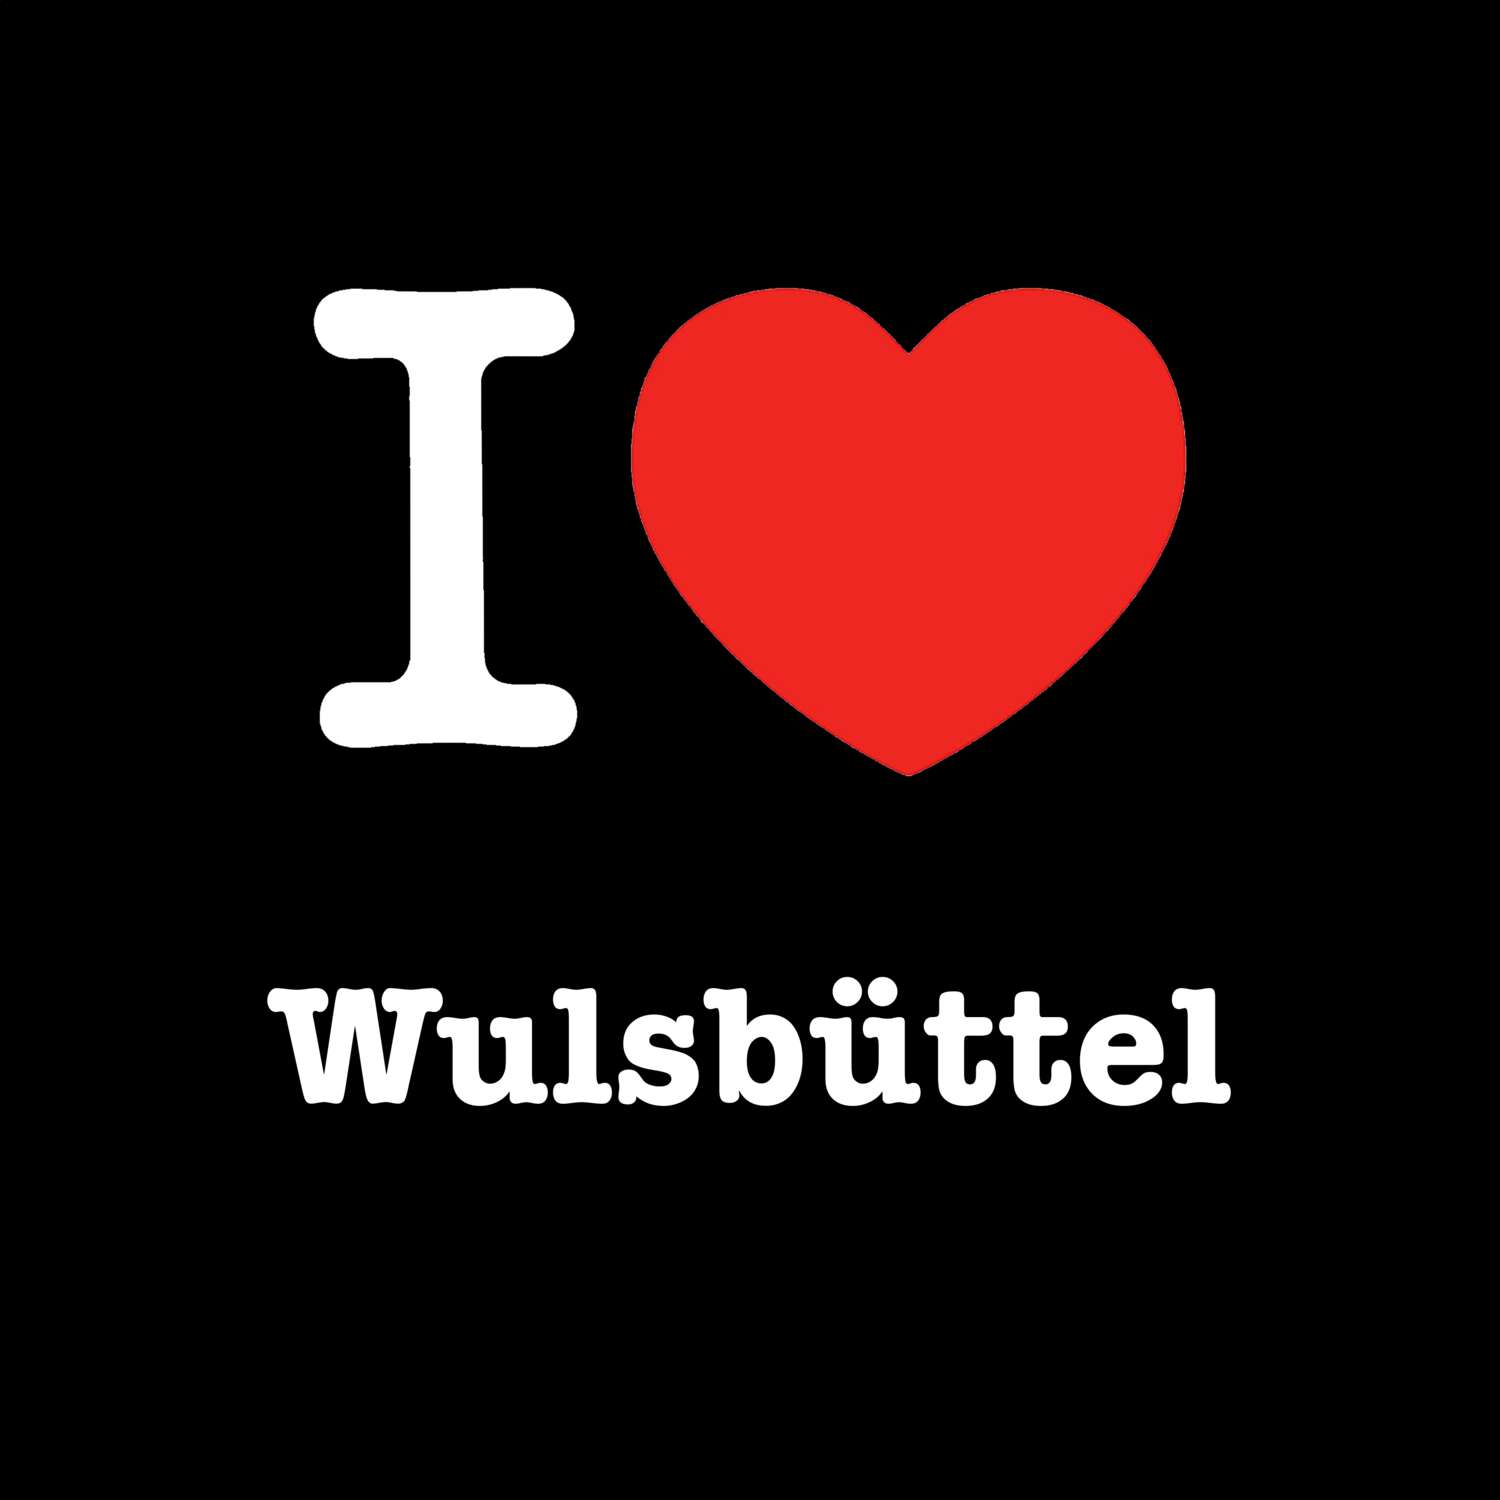 Wulsbüttel T-Shirt »I love«